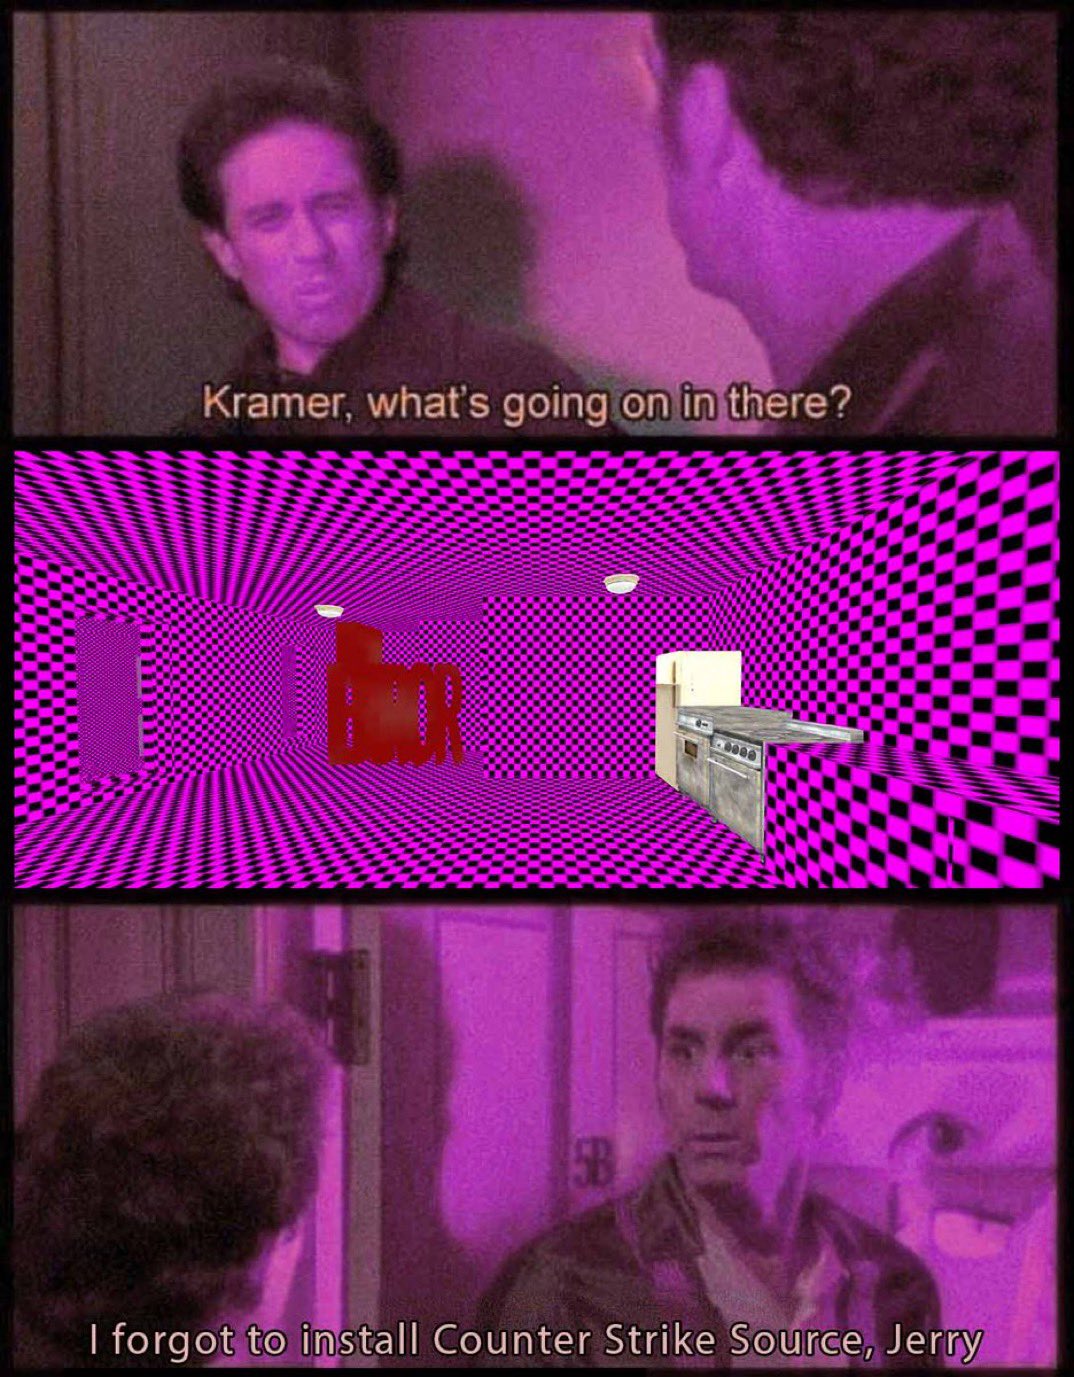 Kramer forgot to install Counter-Strike: Source